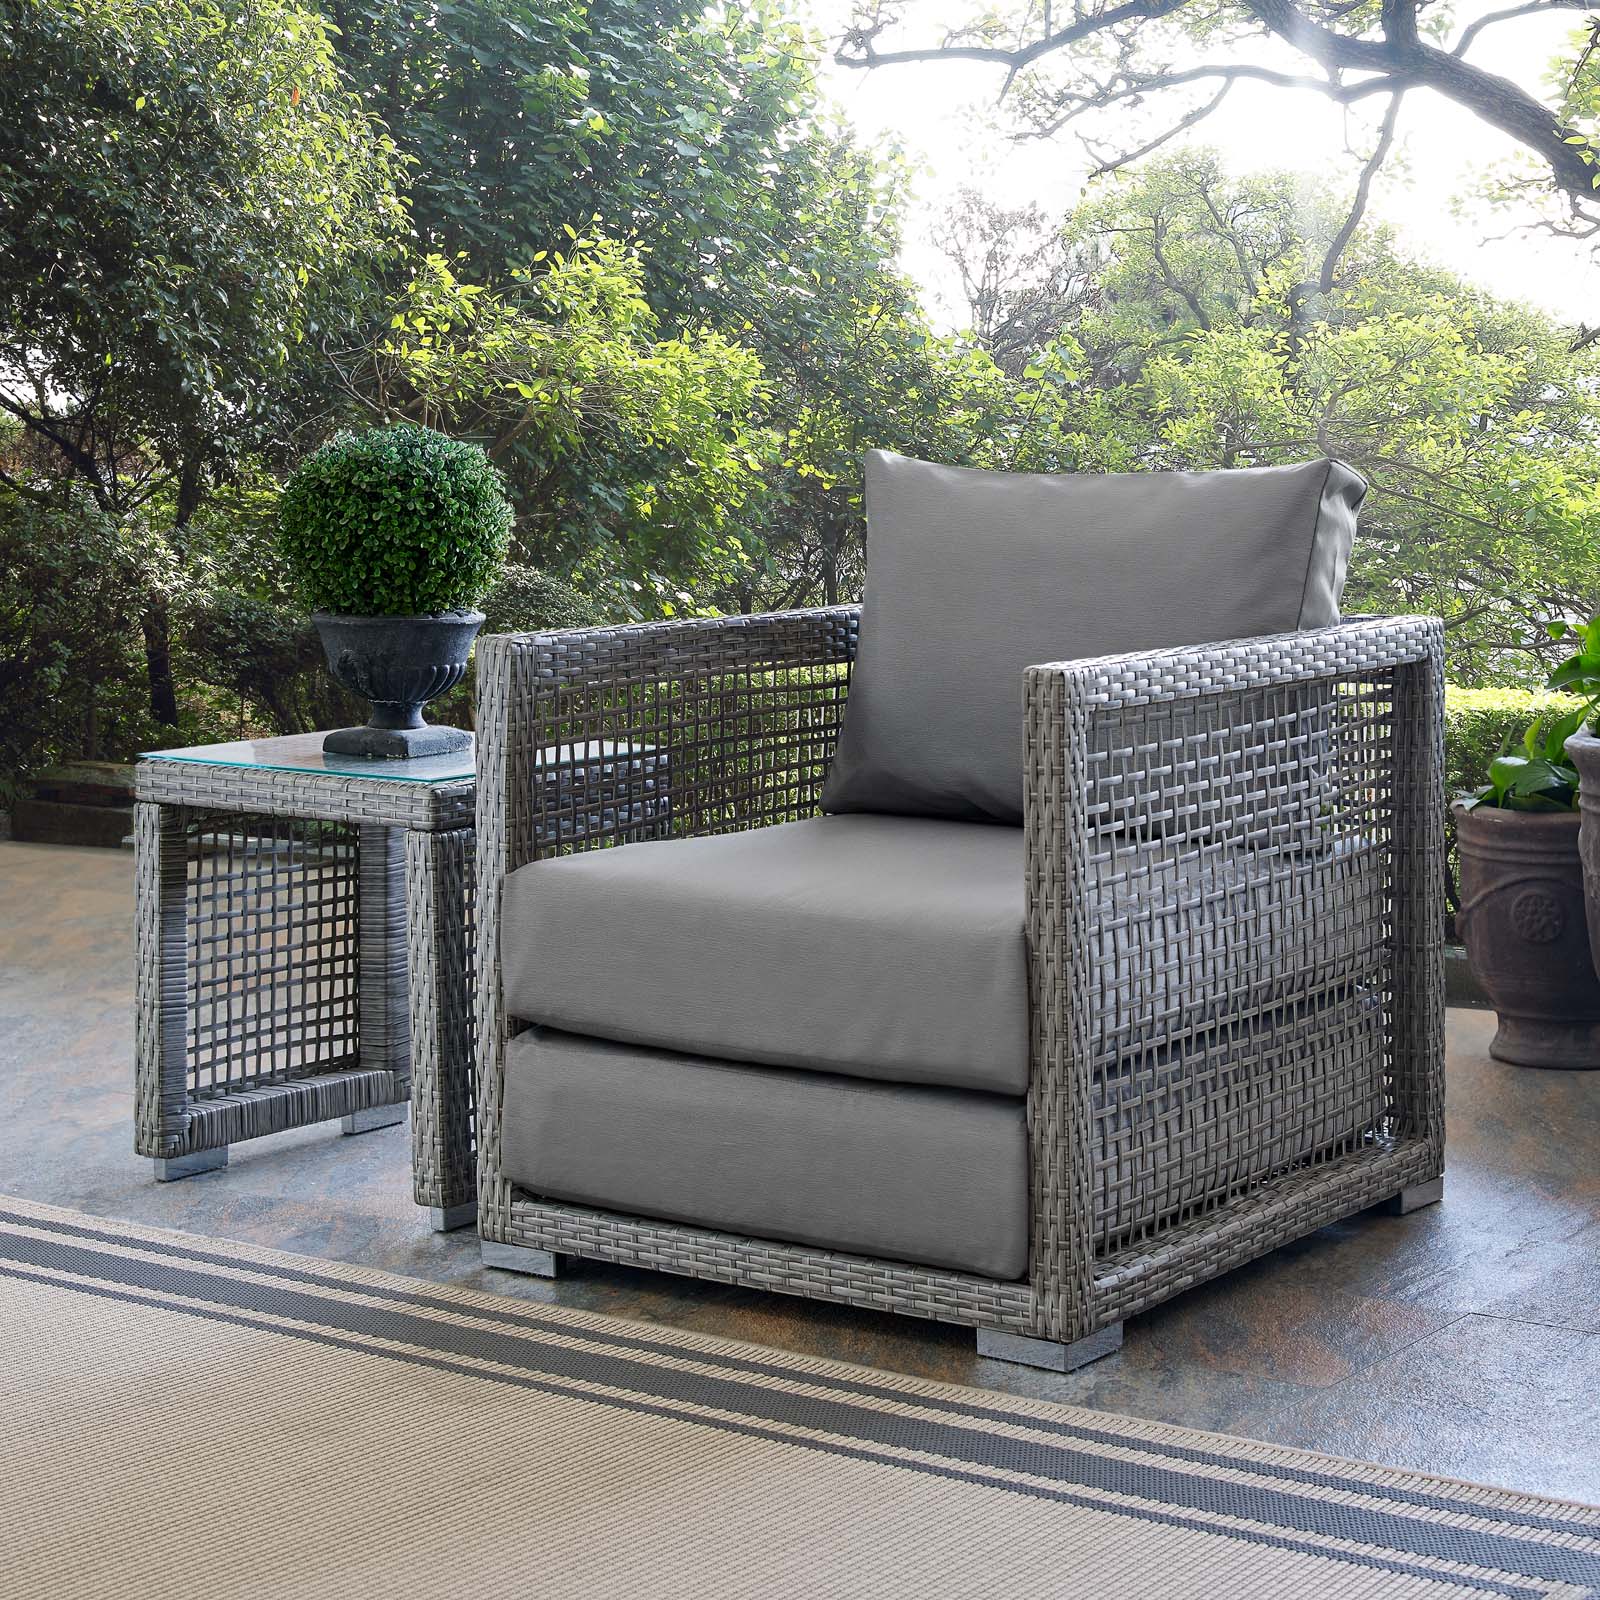 Modern Contemporary Urban Design Outdoor Patio Balcony Garden Furniture Lounge Chair Armchair, Rattan Wicker, Grey Gray - image 5 of 6